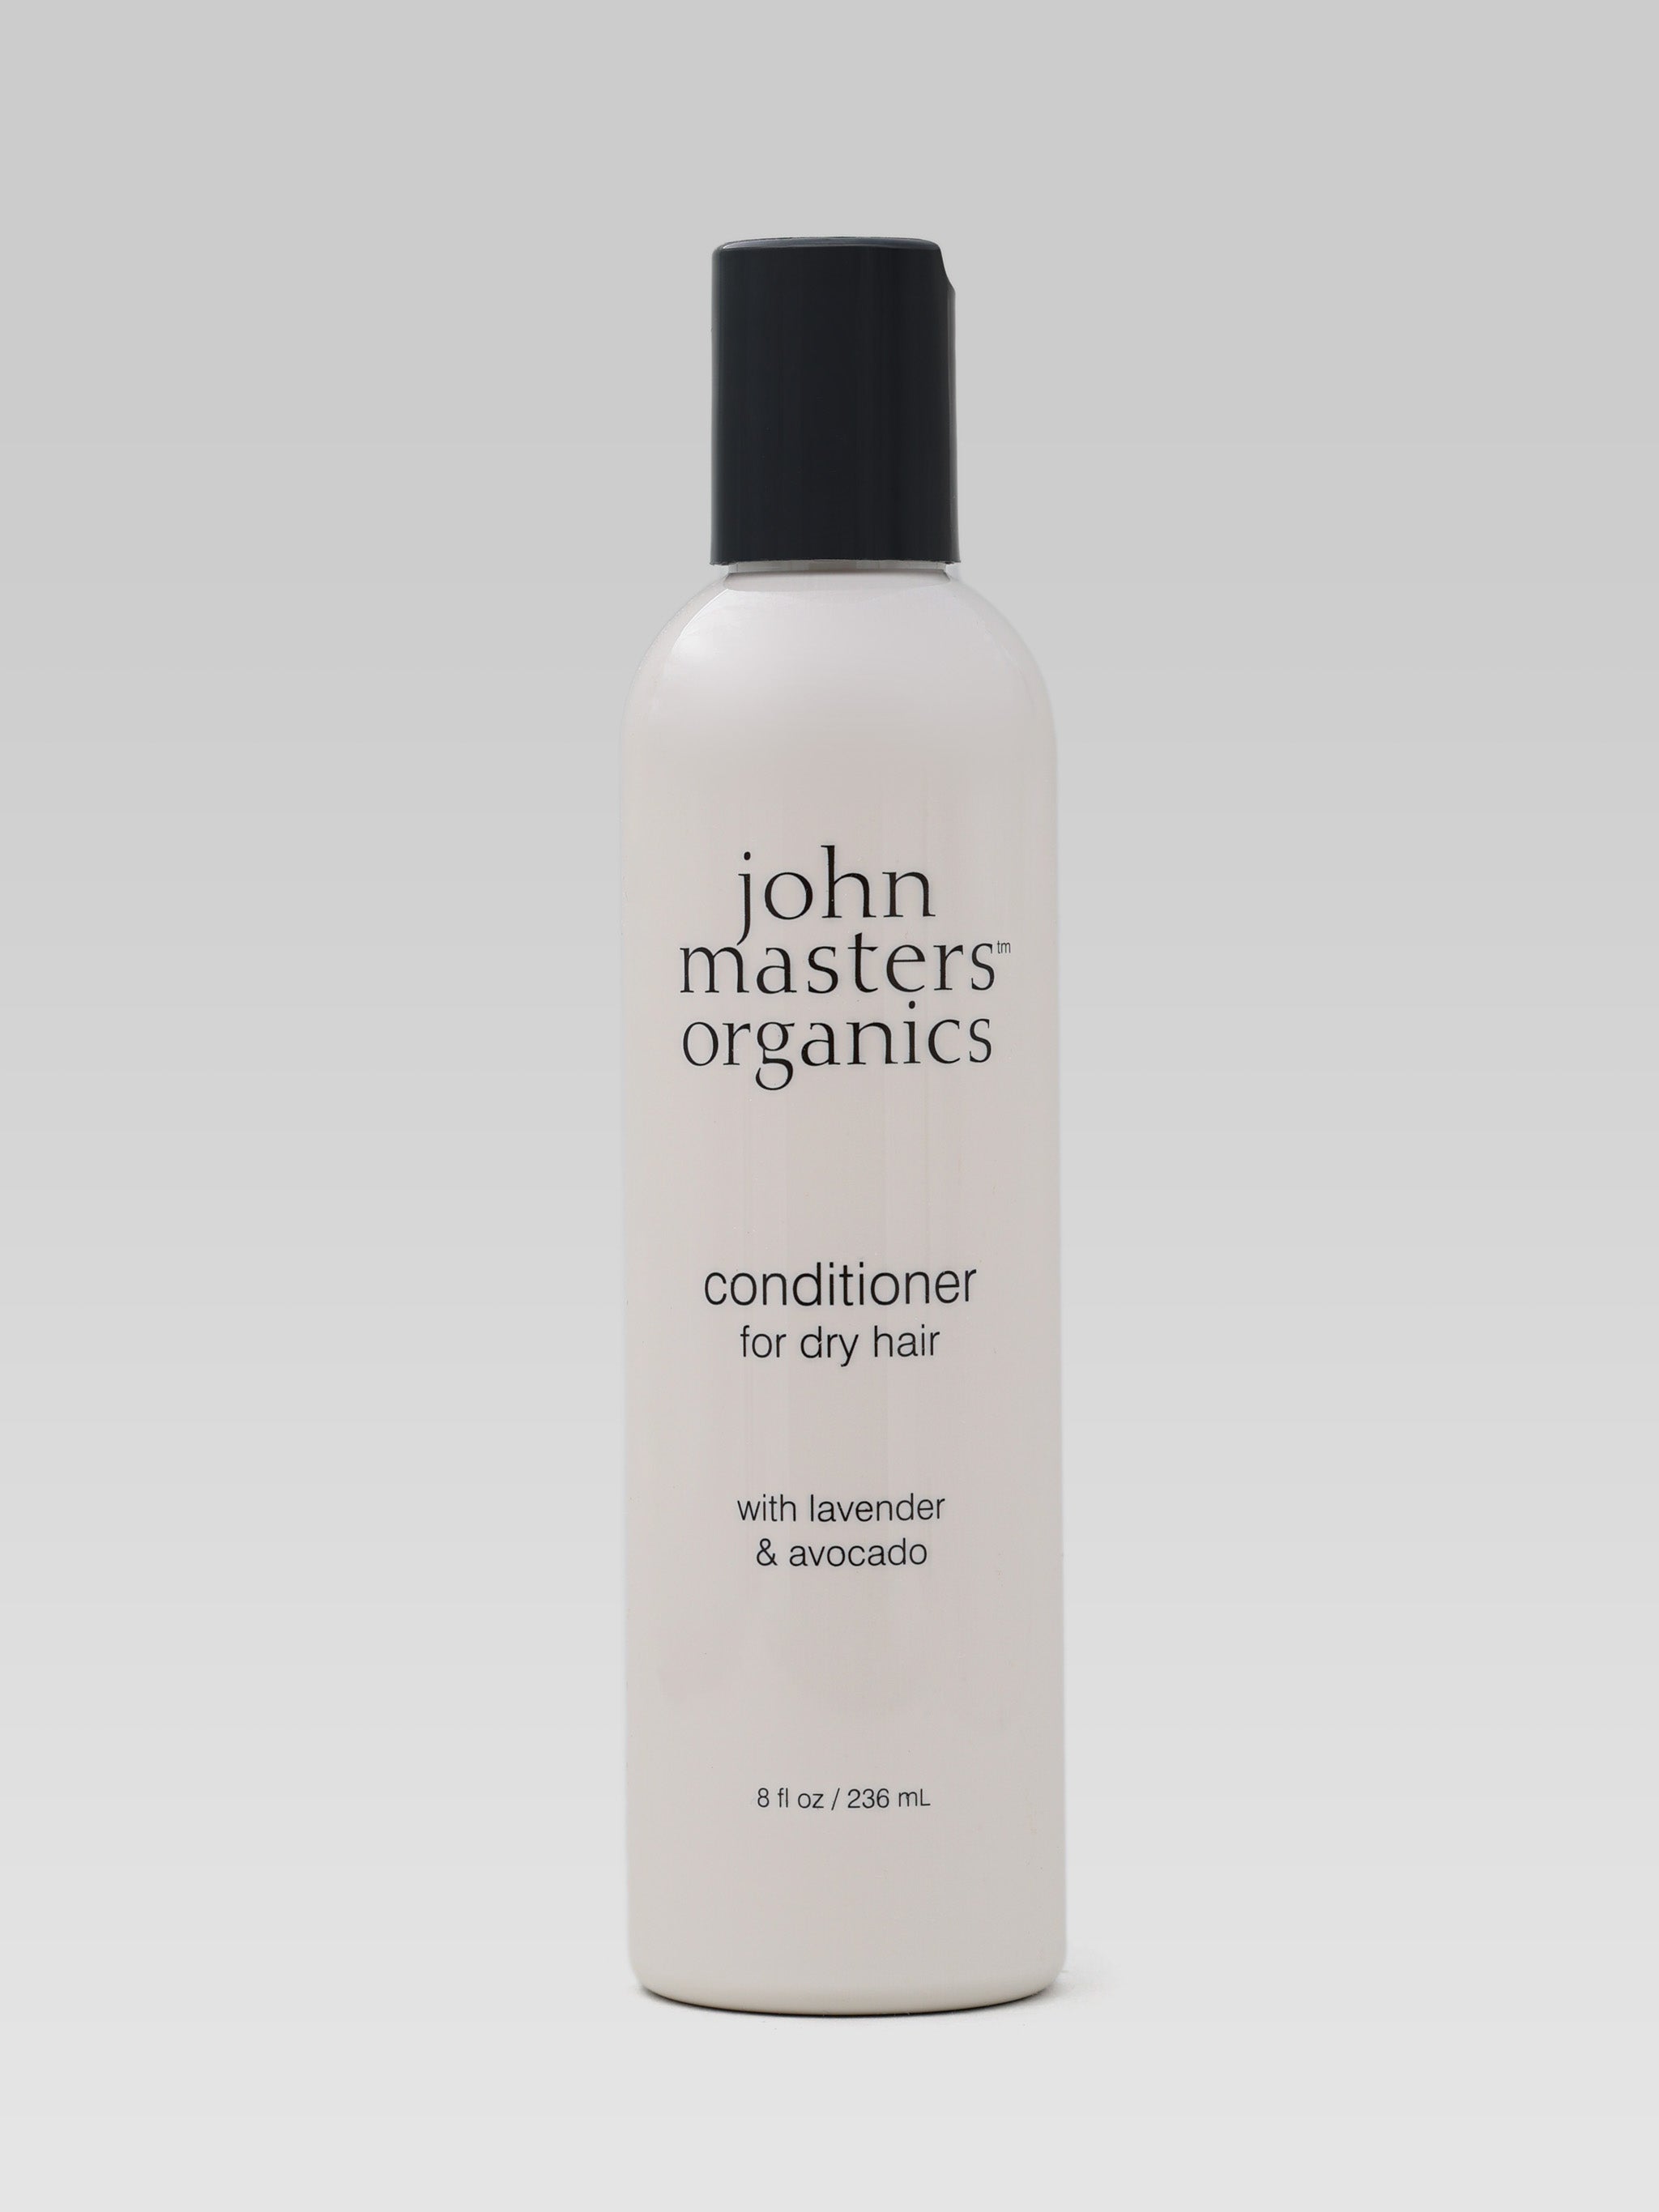 JOHN MASTERS ORGANICS Conditioner for Dry Hair